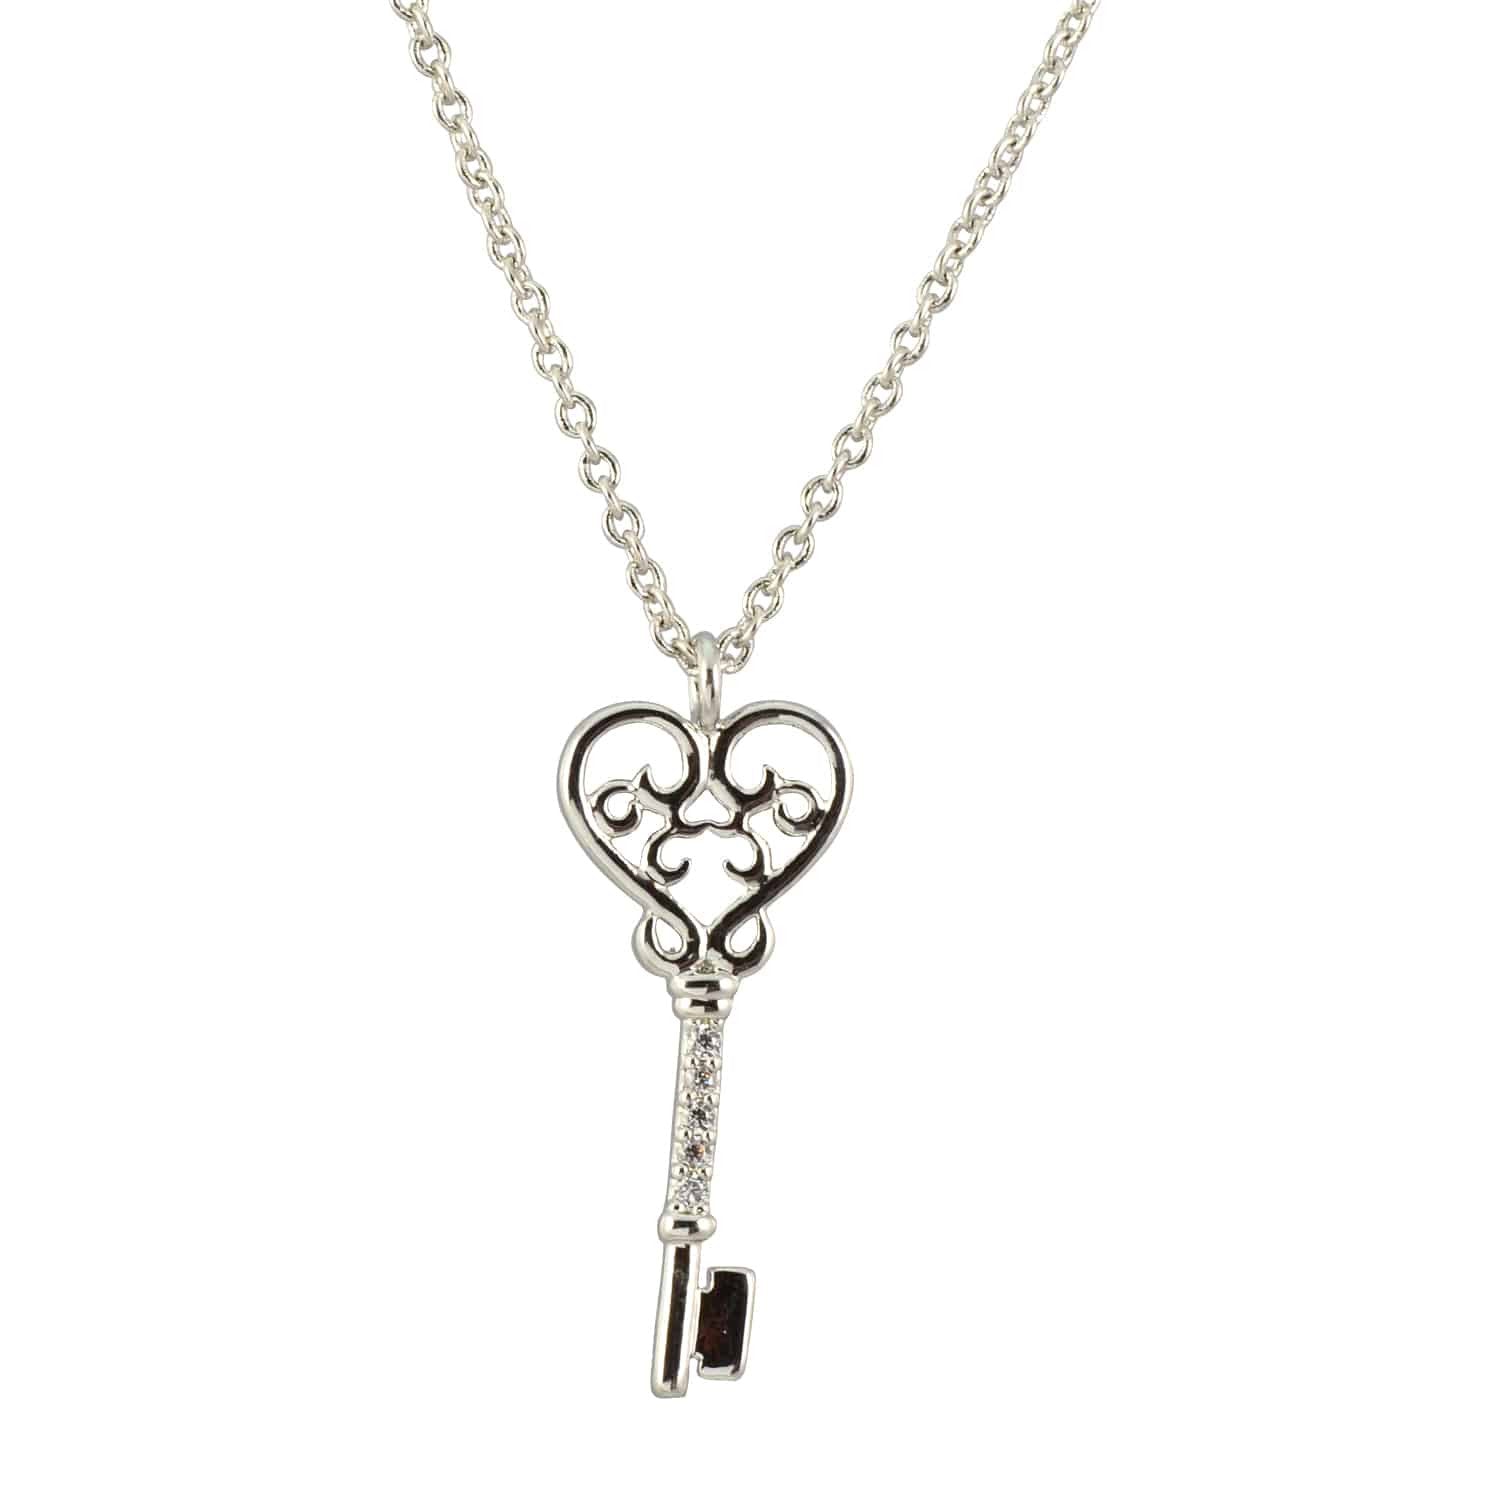 Enreverie Key Necklace, Silver Plated Pendant